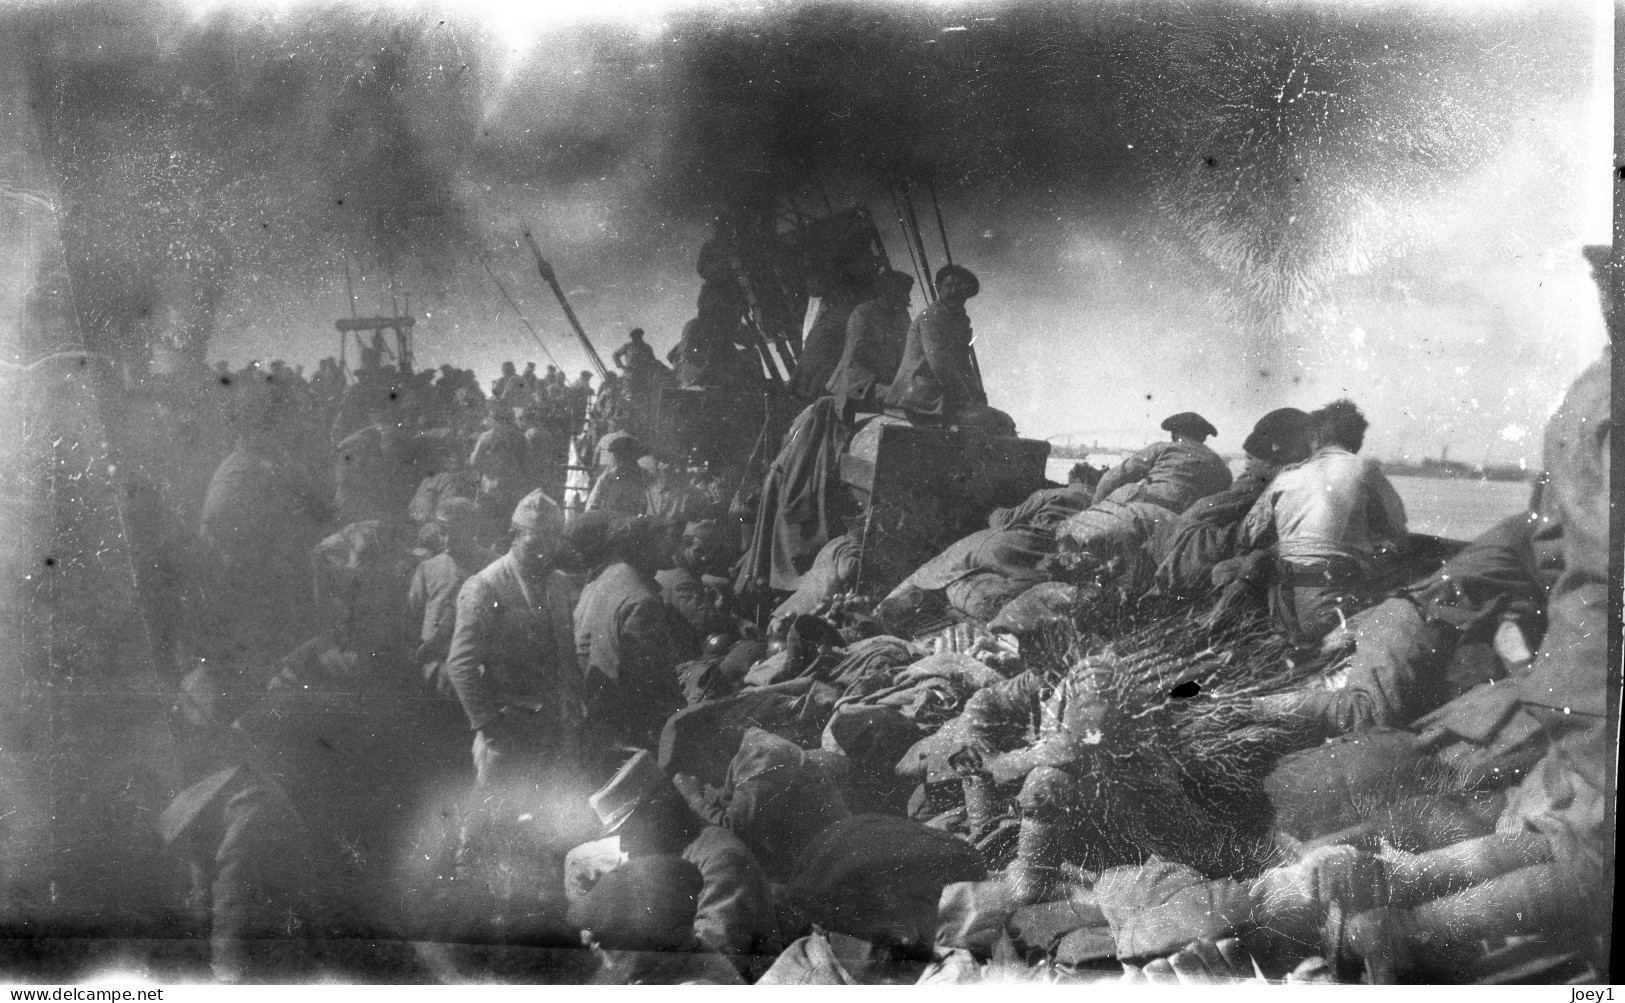 Photo Grande Guerre Format 13/18 Tirage Contemporain Argentique,Constantinople. - Guerra, Militari